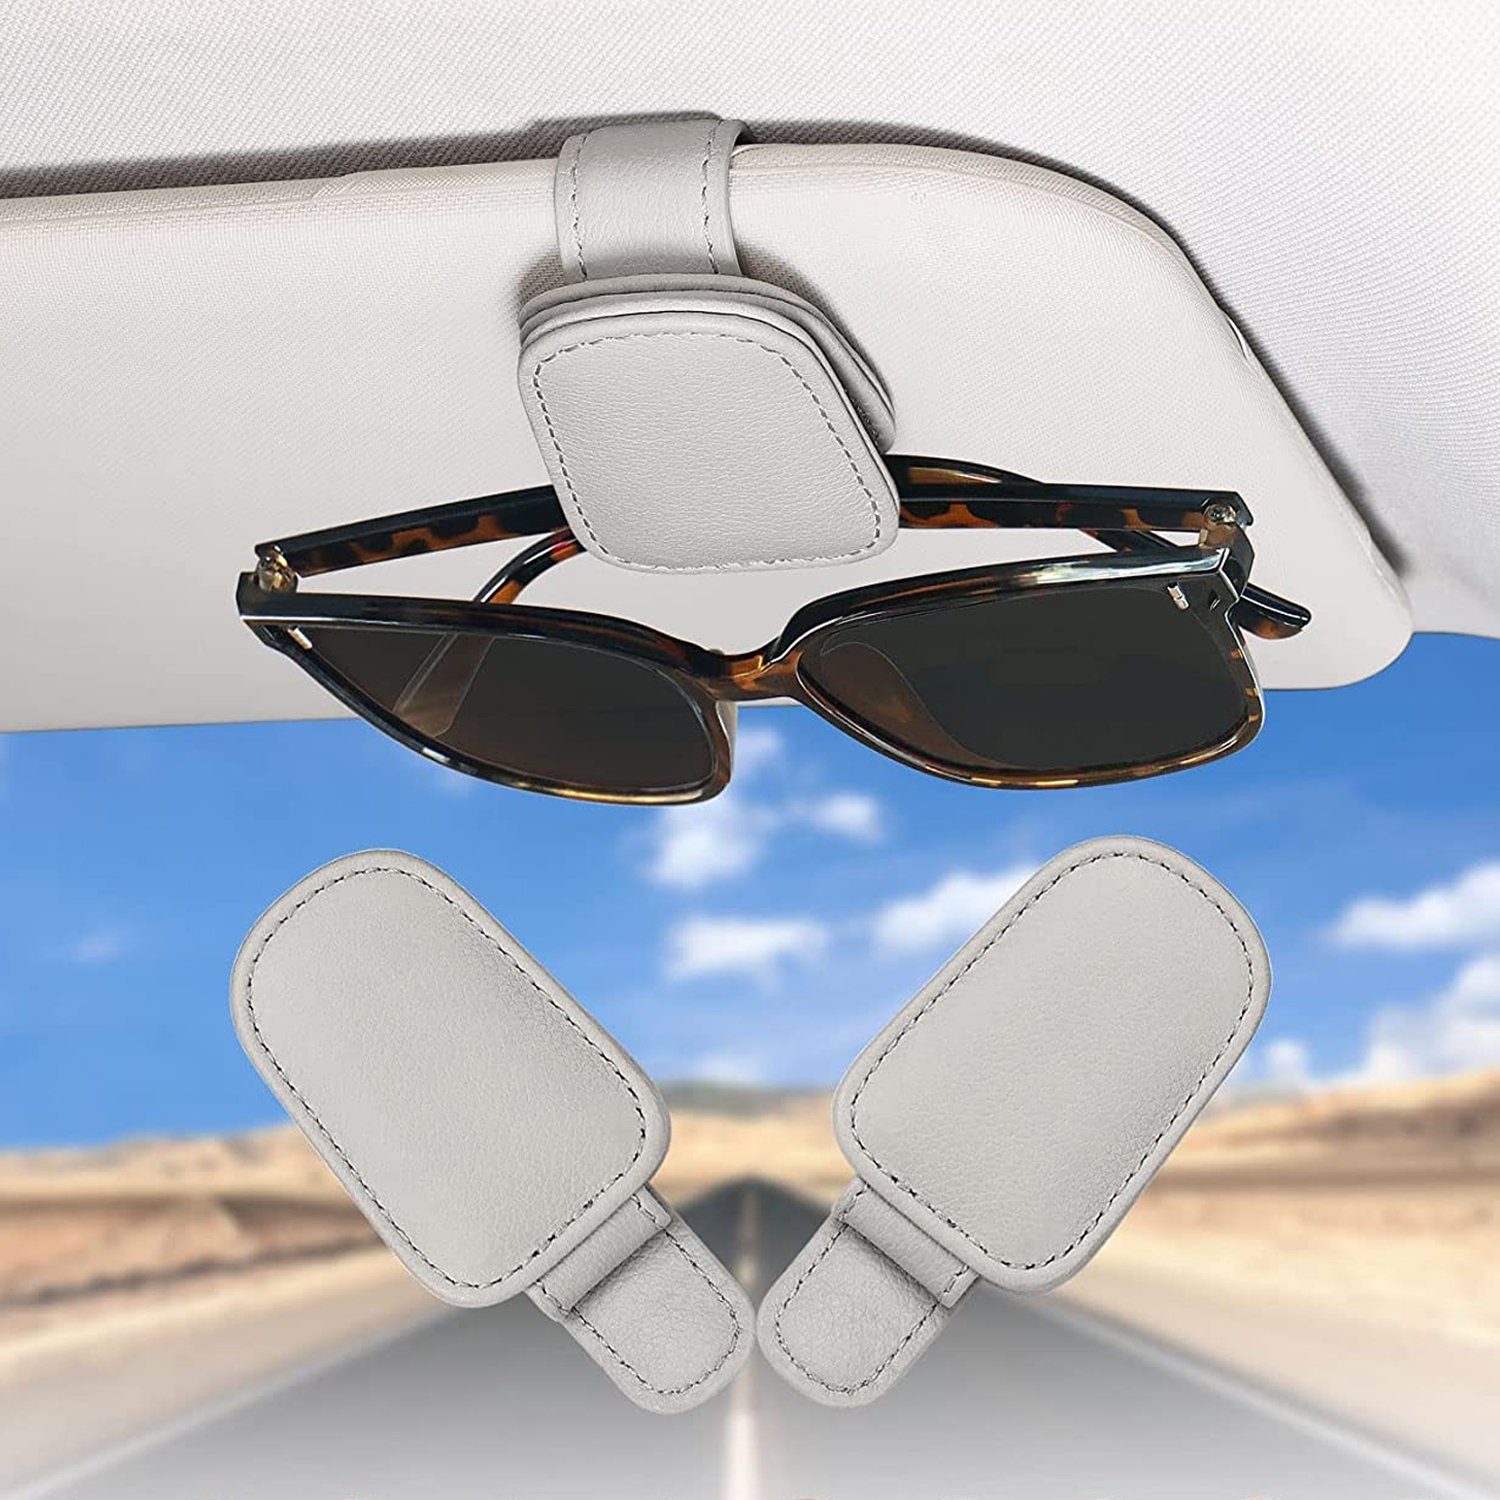 NUODWELL Autosonnenschutz 2 Pack Brillenhalter Auto Sonnenblende, Visier Sonnenbrillenhalterung Grau